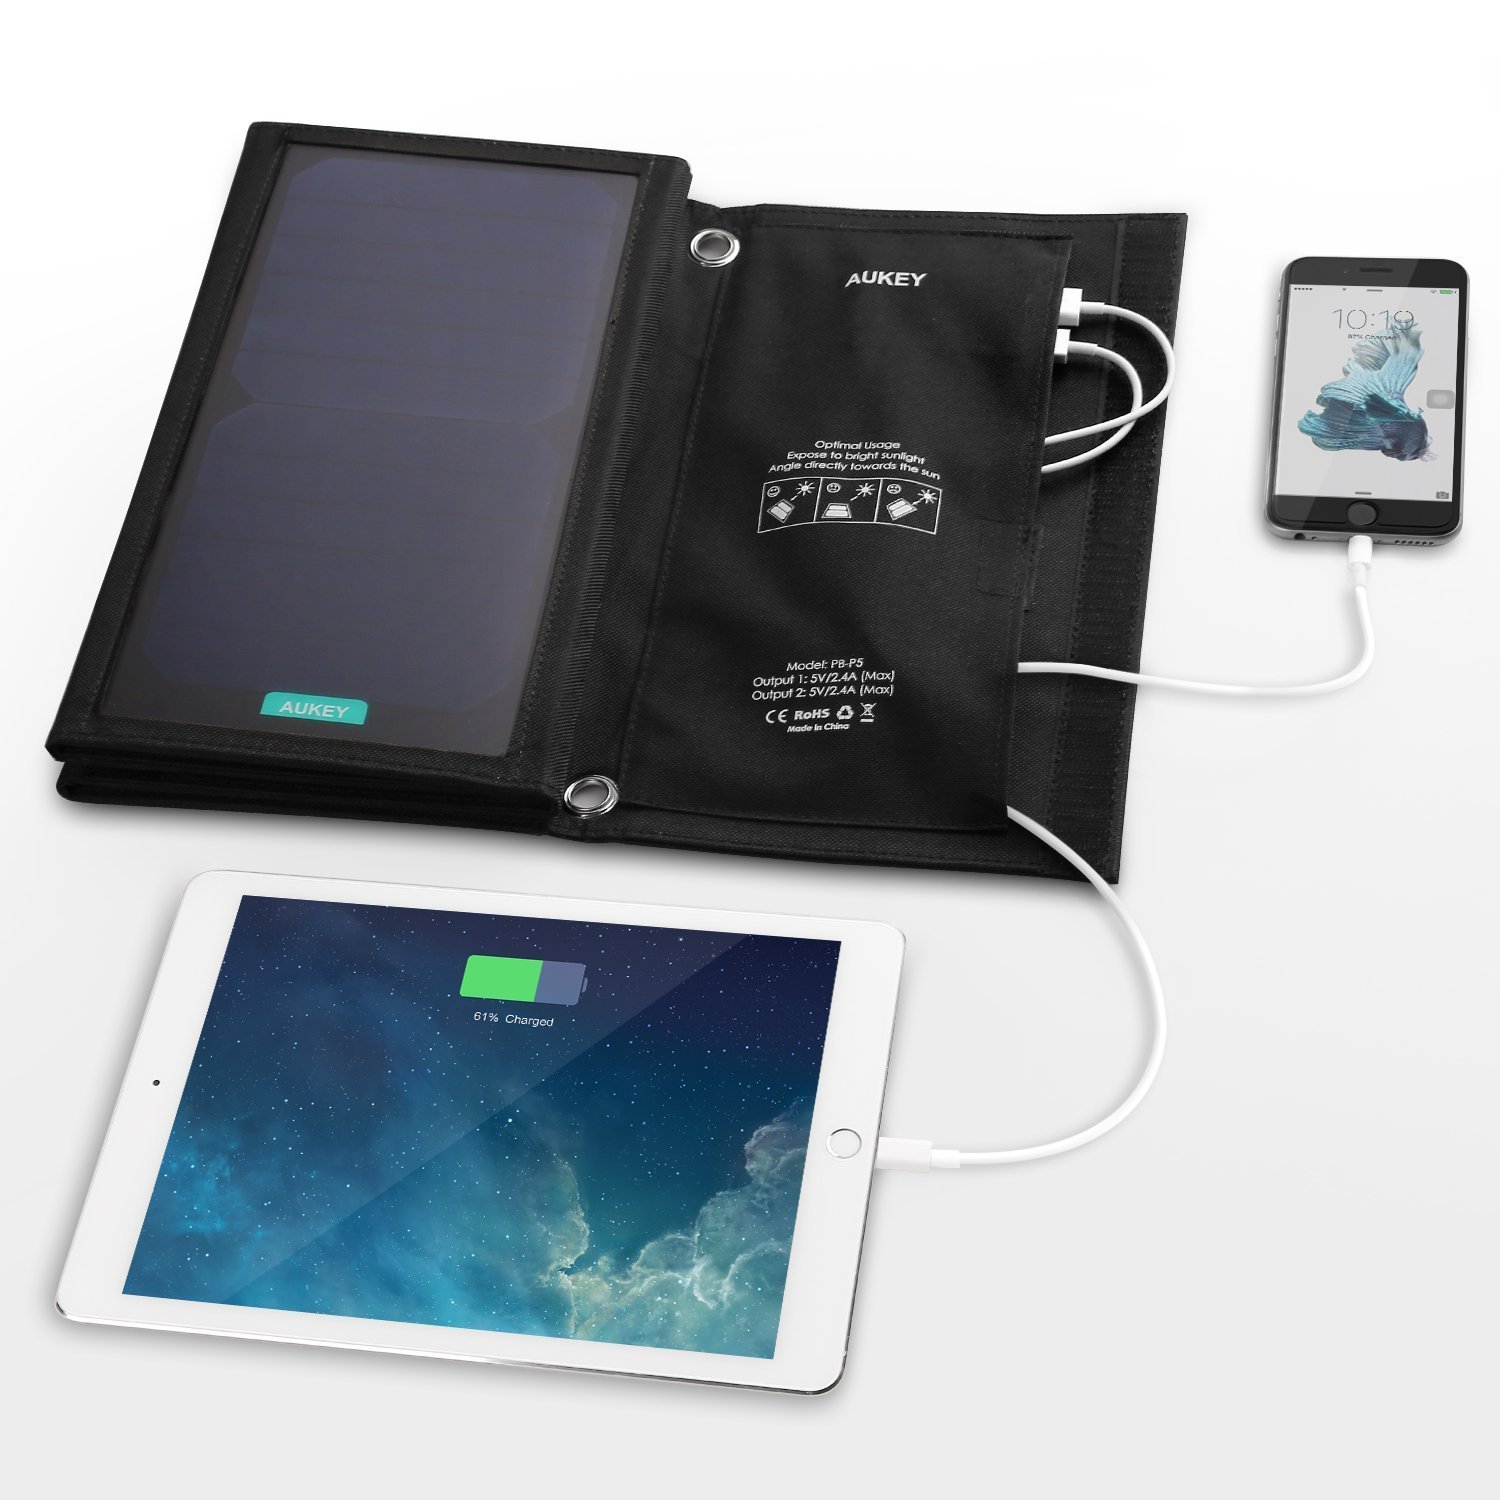 Bild zu AUKEY PB-P5 Solar Ladegerät mit 2 USB-Ports für 21,99€